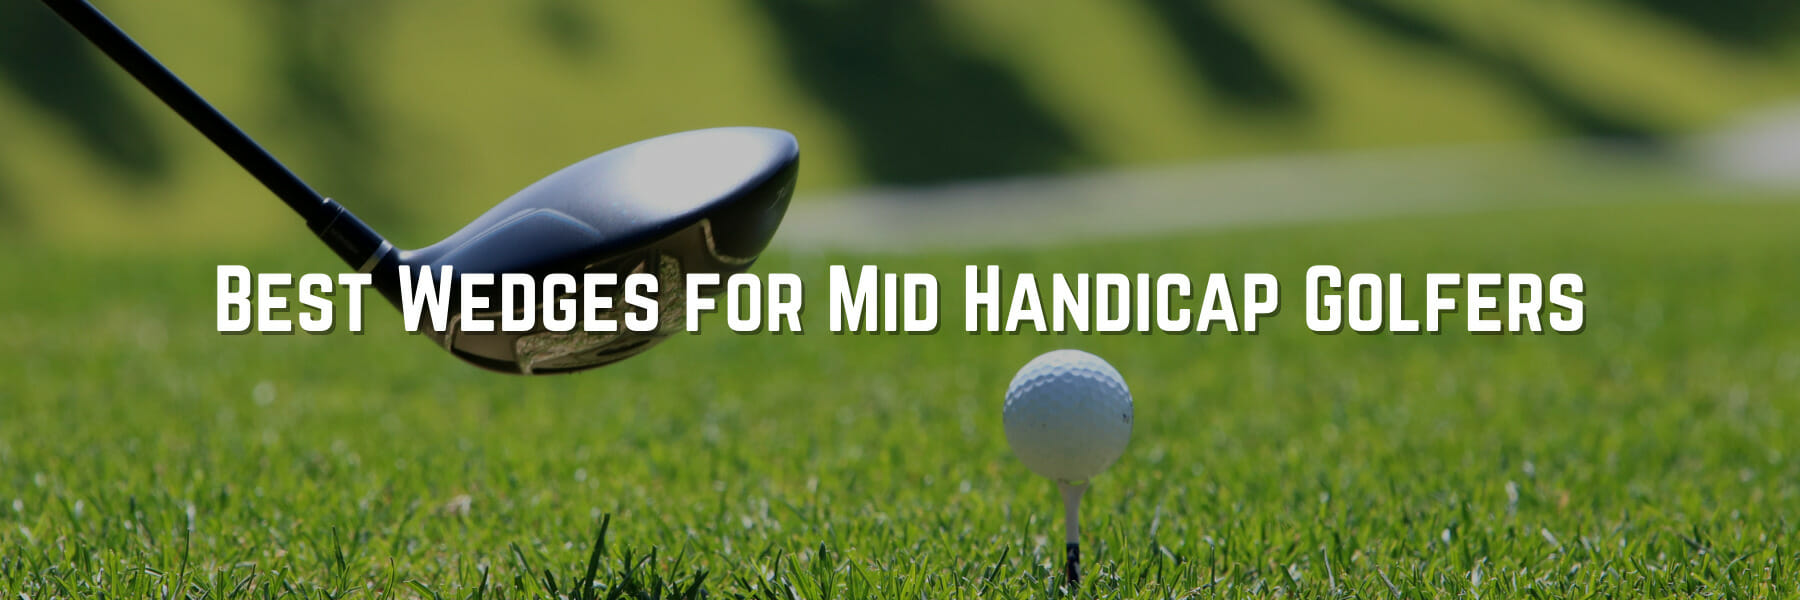 Best Wedges For Mid Handicap Golfers